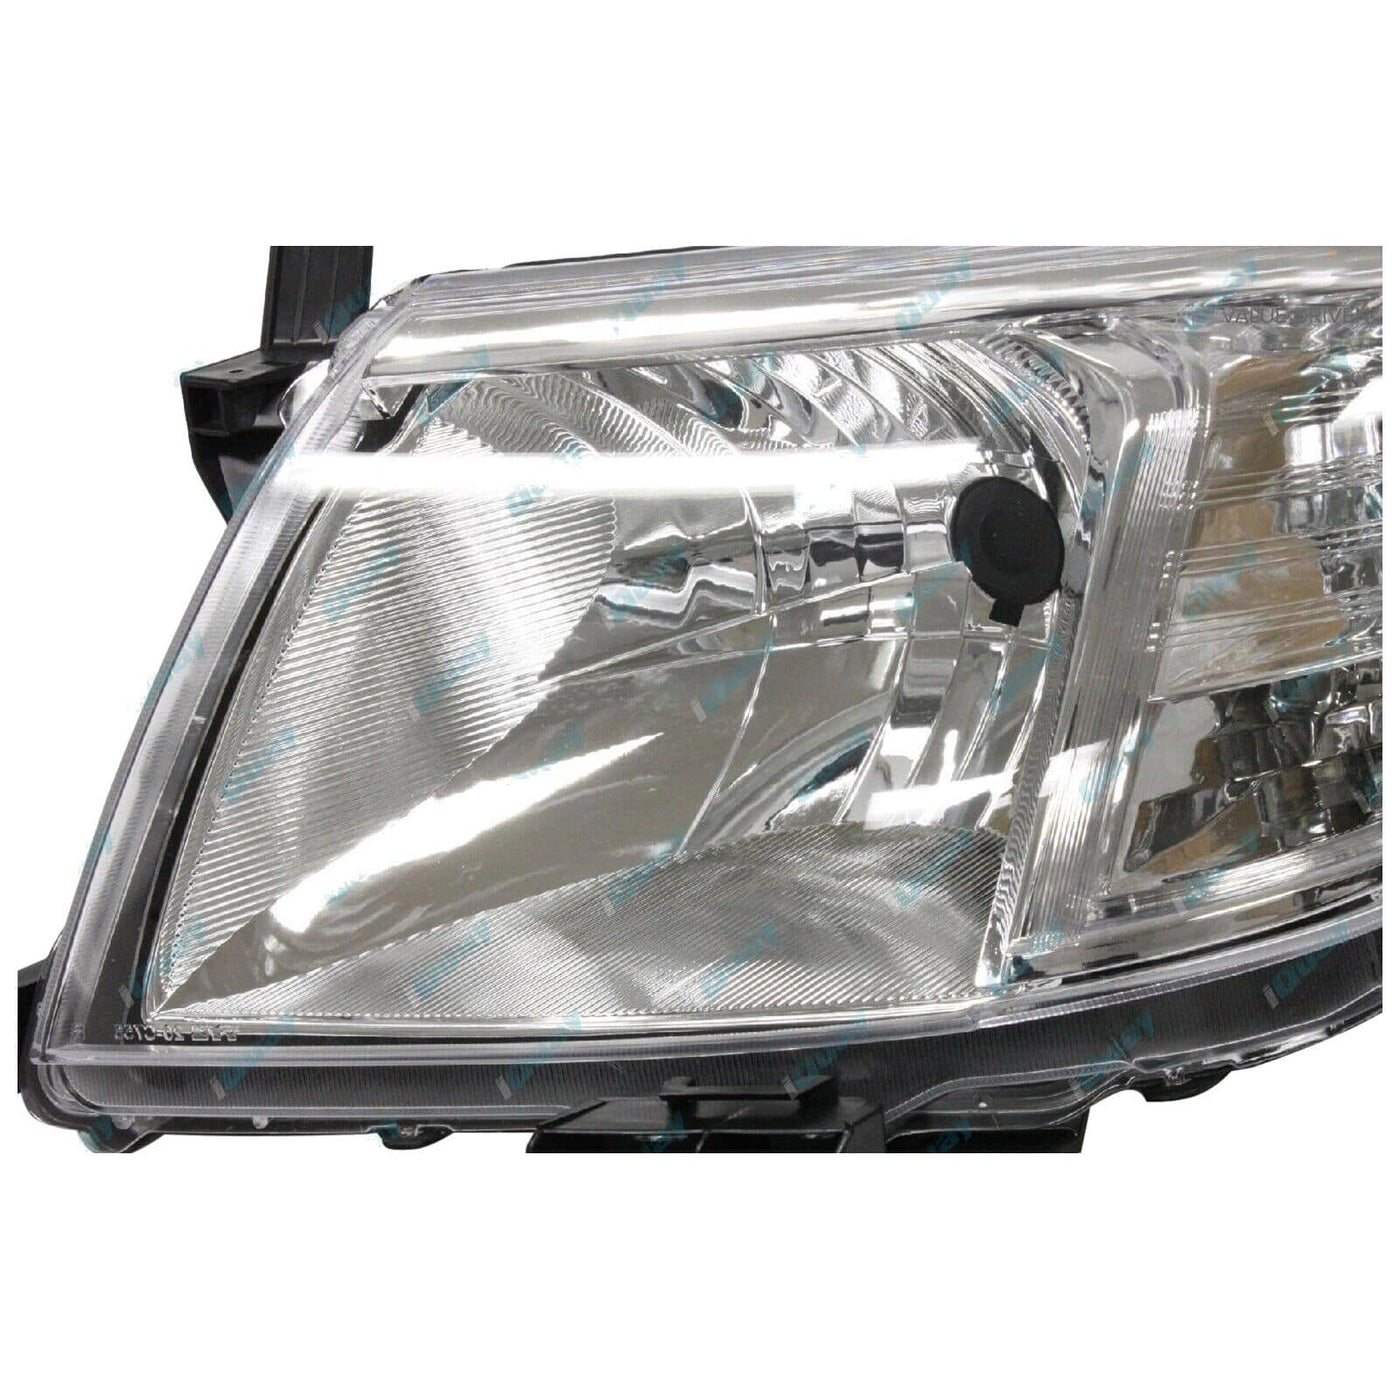 OEM Headlight Suitable for Toyota Hilux SR & SR5 2012-2015 Passenger Side - OZI4X4 PTY LTD